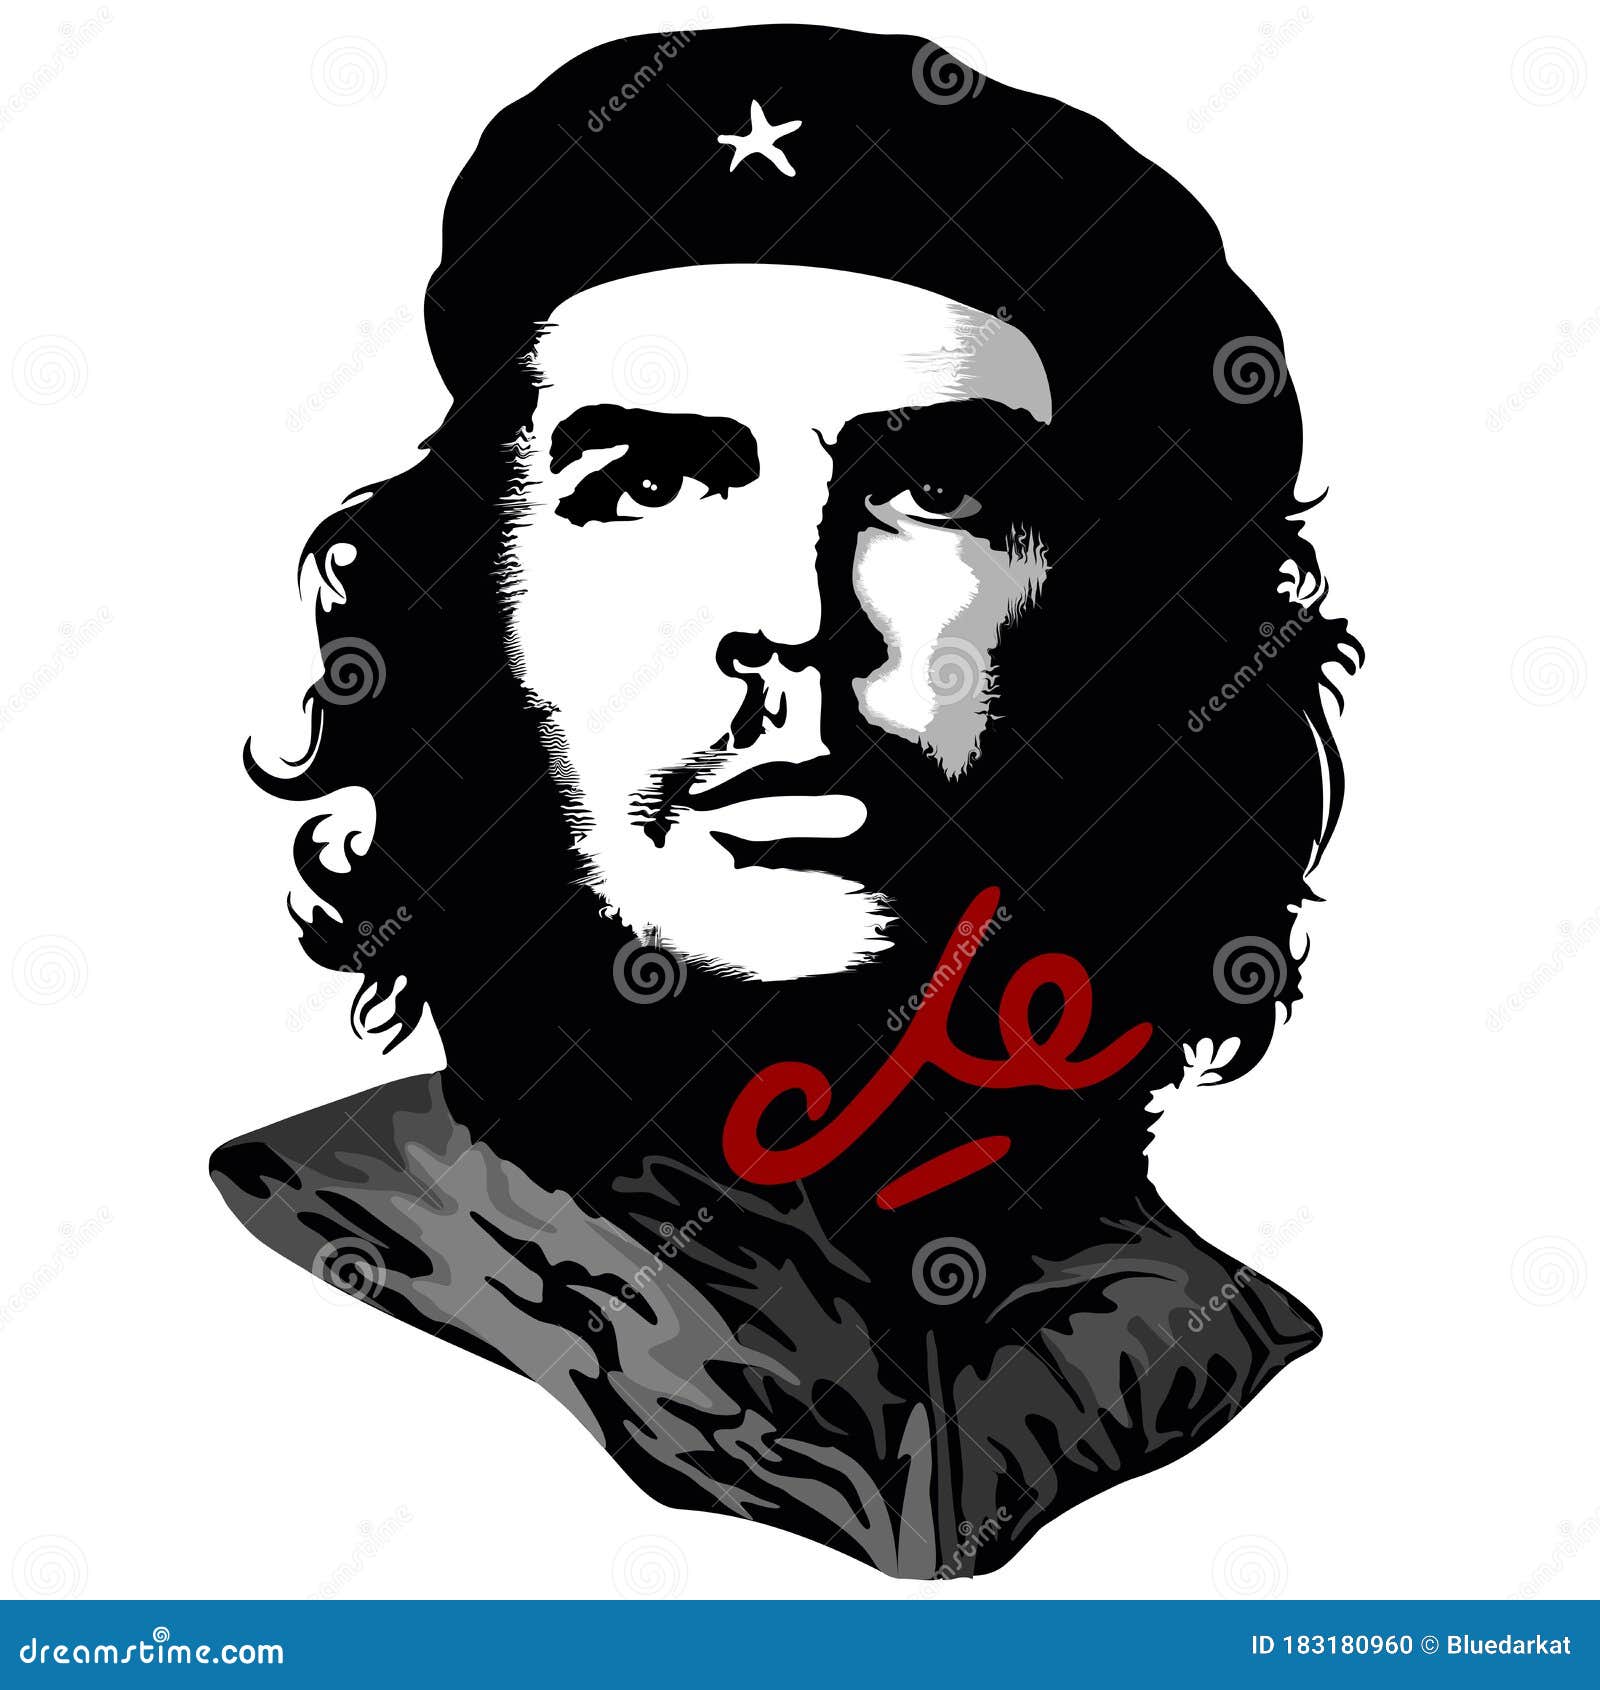 Arm Portrait Realistic Che Guevara Tattoo by Peter Tattooer